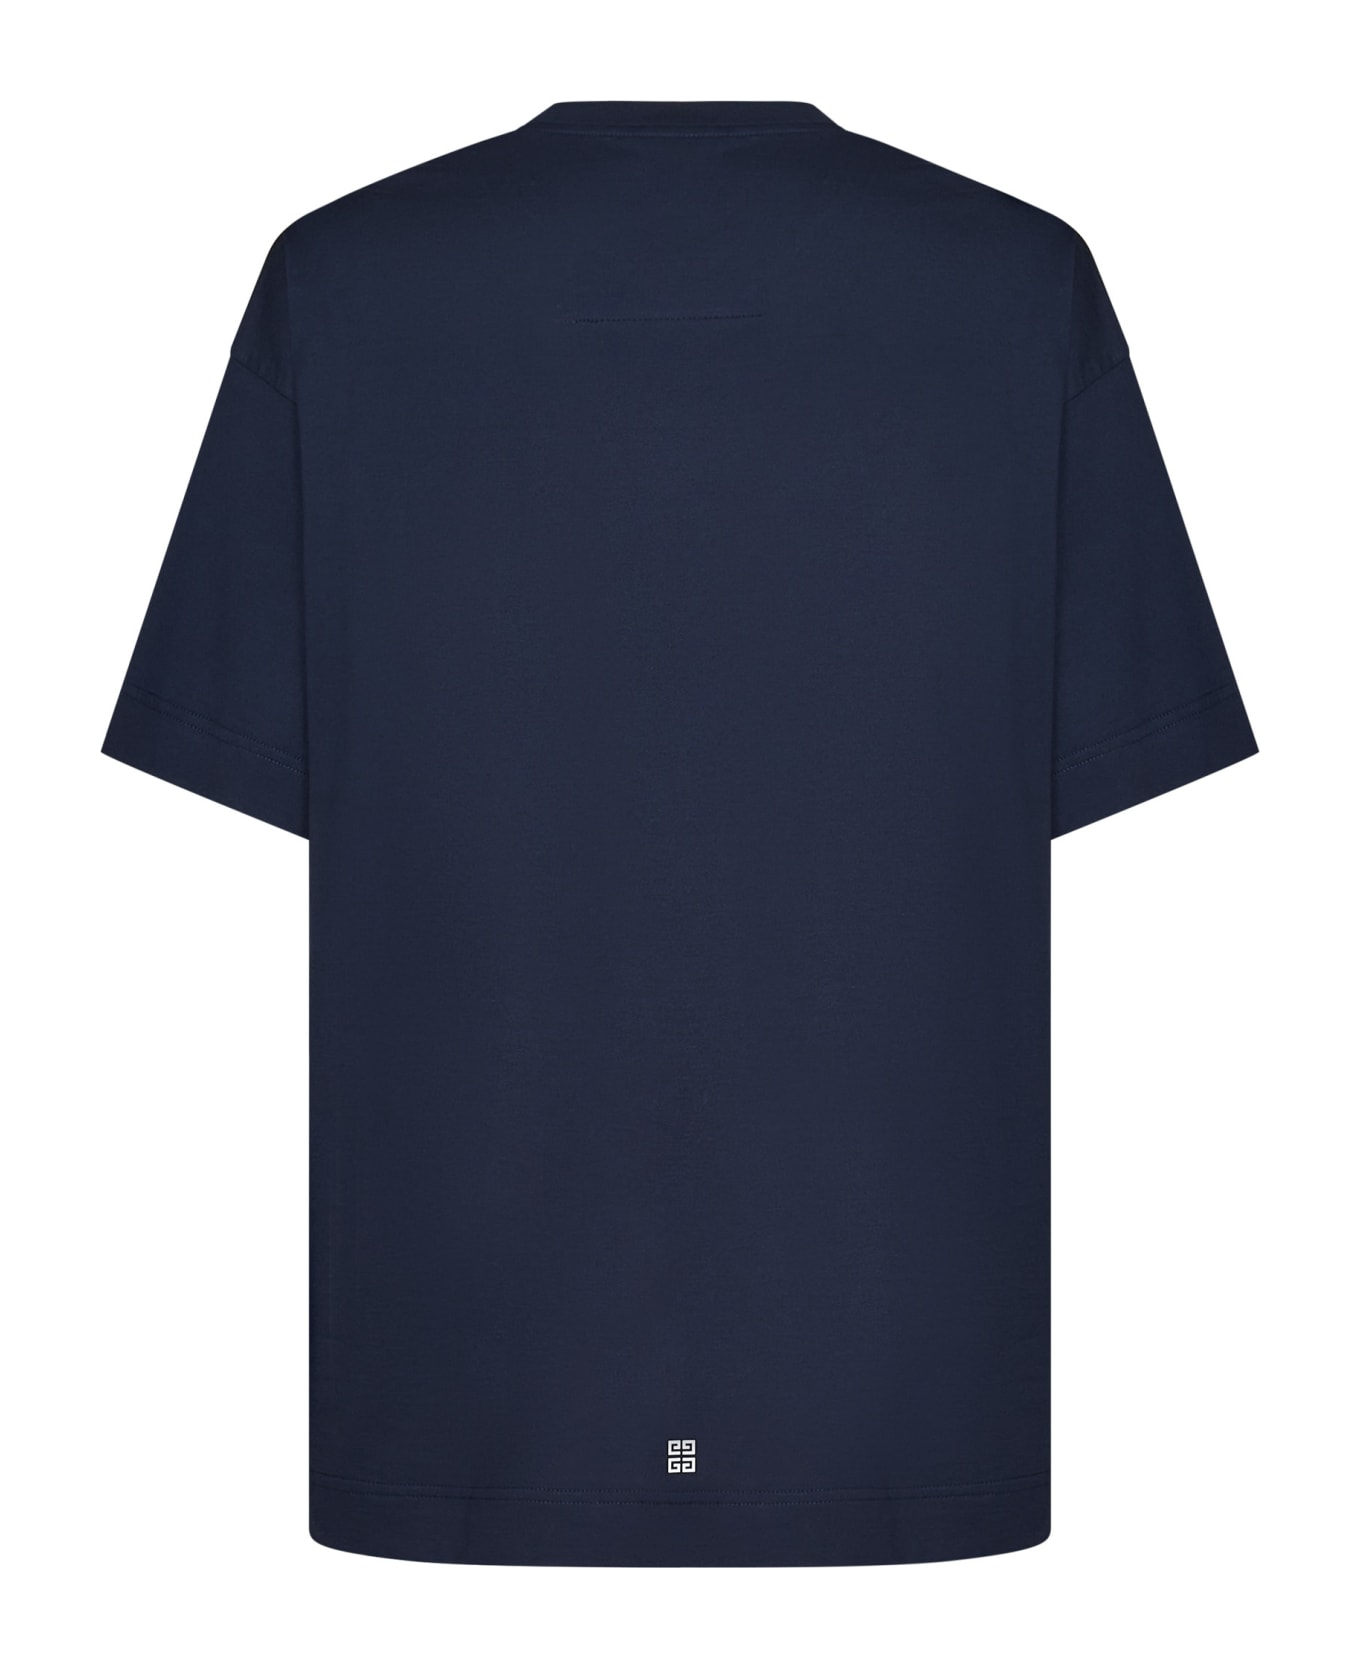 Givenchy T-shirt - Blue